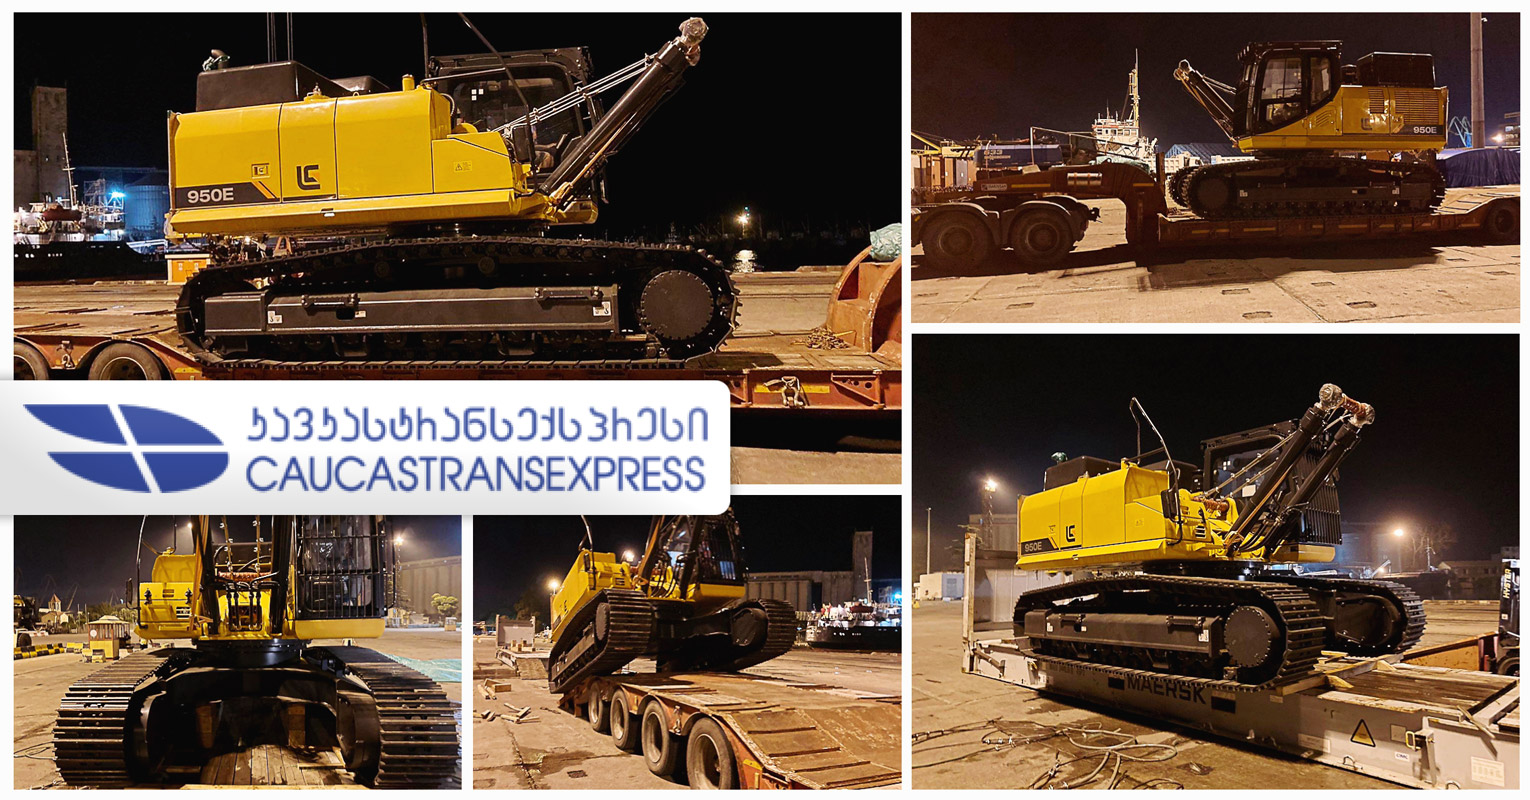 Caucastransexpress Transported an Excavator from Poti, Georgia to Baku, Azerbaijan